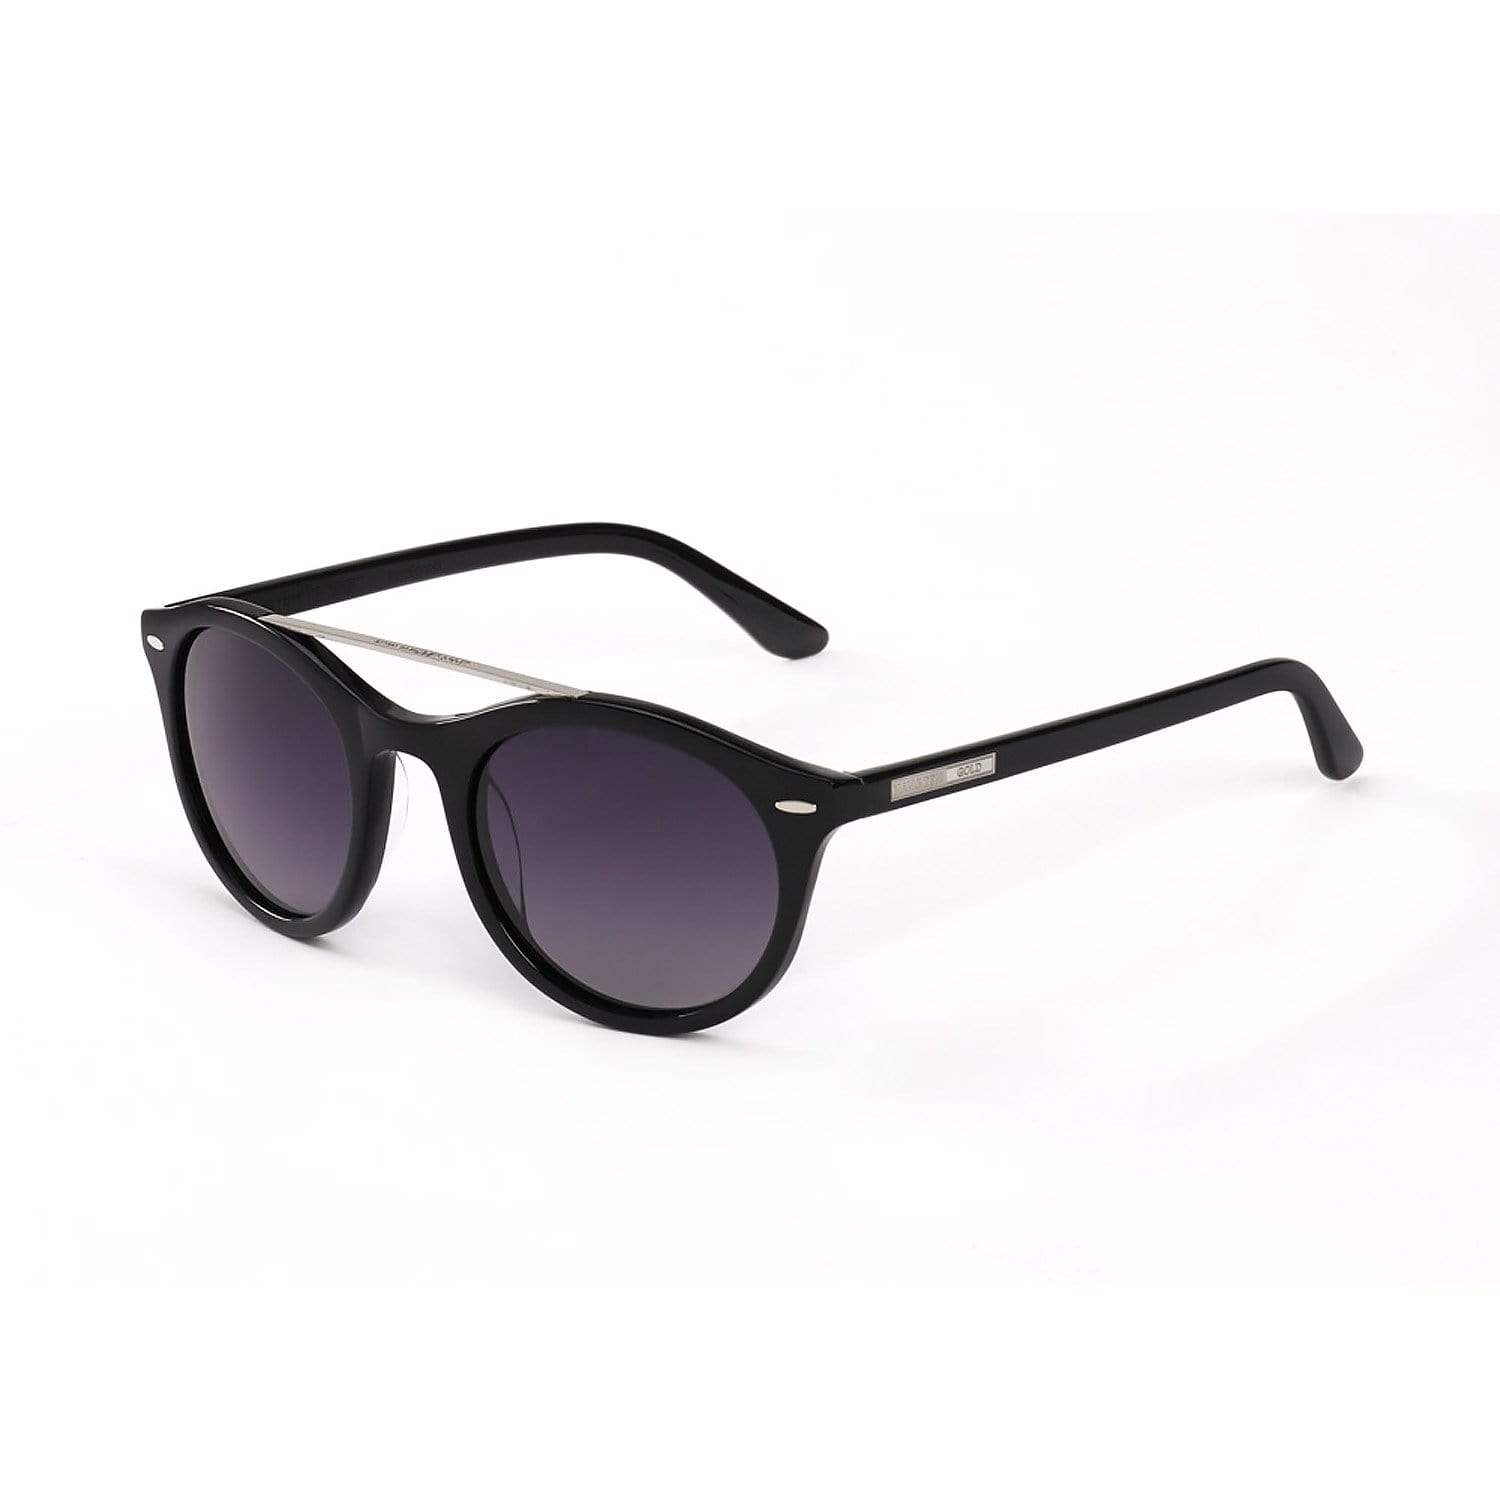 Hang Ten Gold Apparel : Eyewear - Sunglasses Hang Ten Gold GoldSchool-Shiny Black/Gradient Smoke Lens